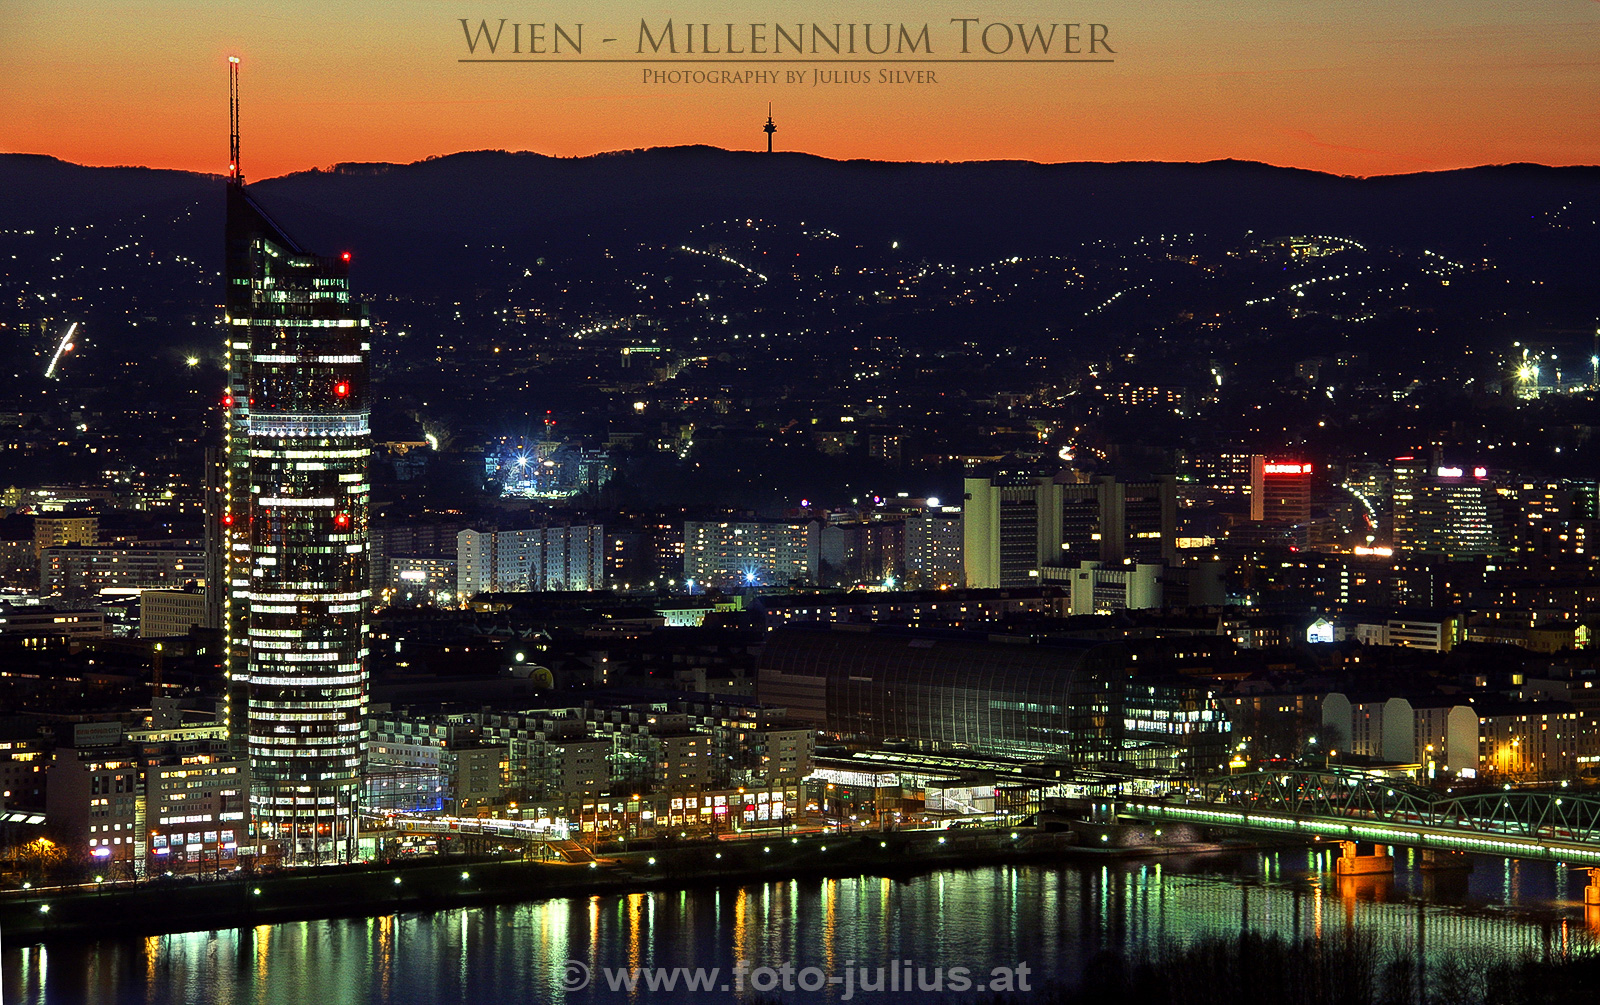 W5492a_Wien_Millennium_Tower.jpg, 886kB